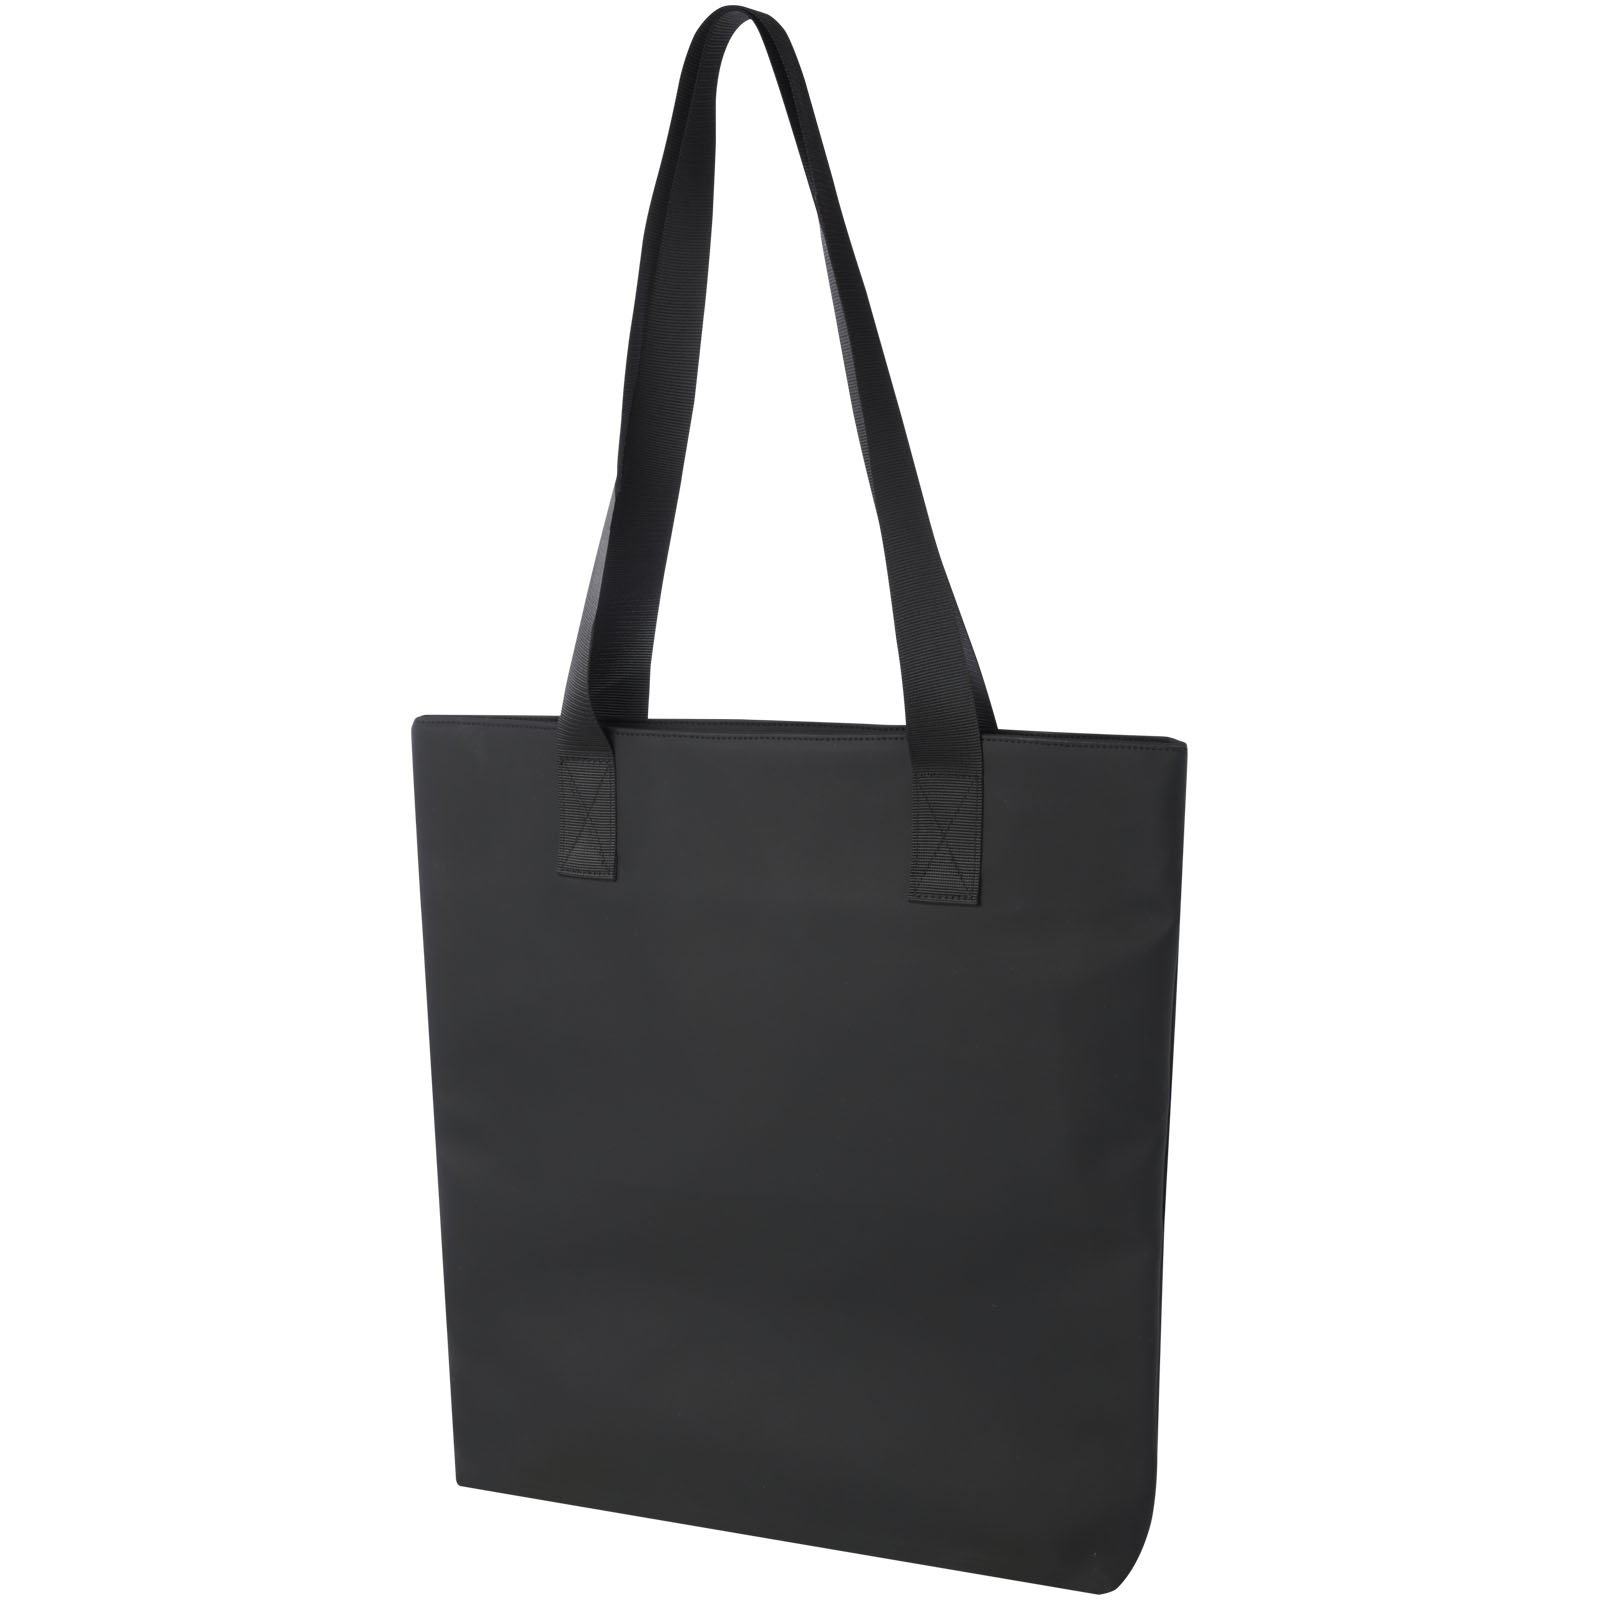 Advertising Shopping & Tote Bags - Turner tote bag